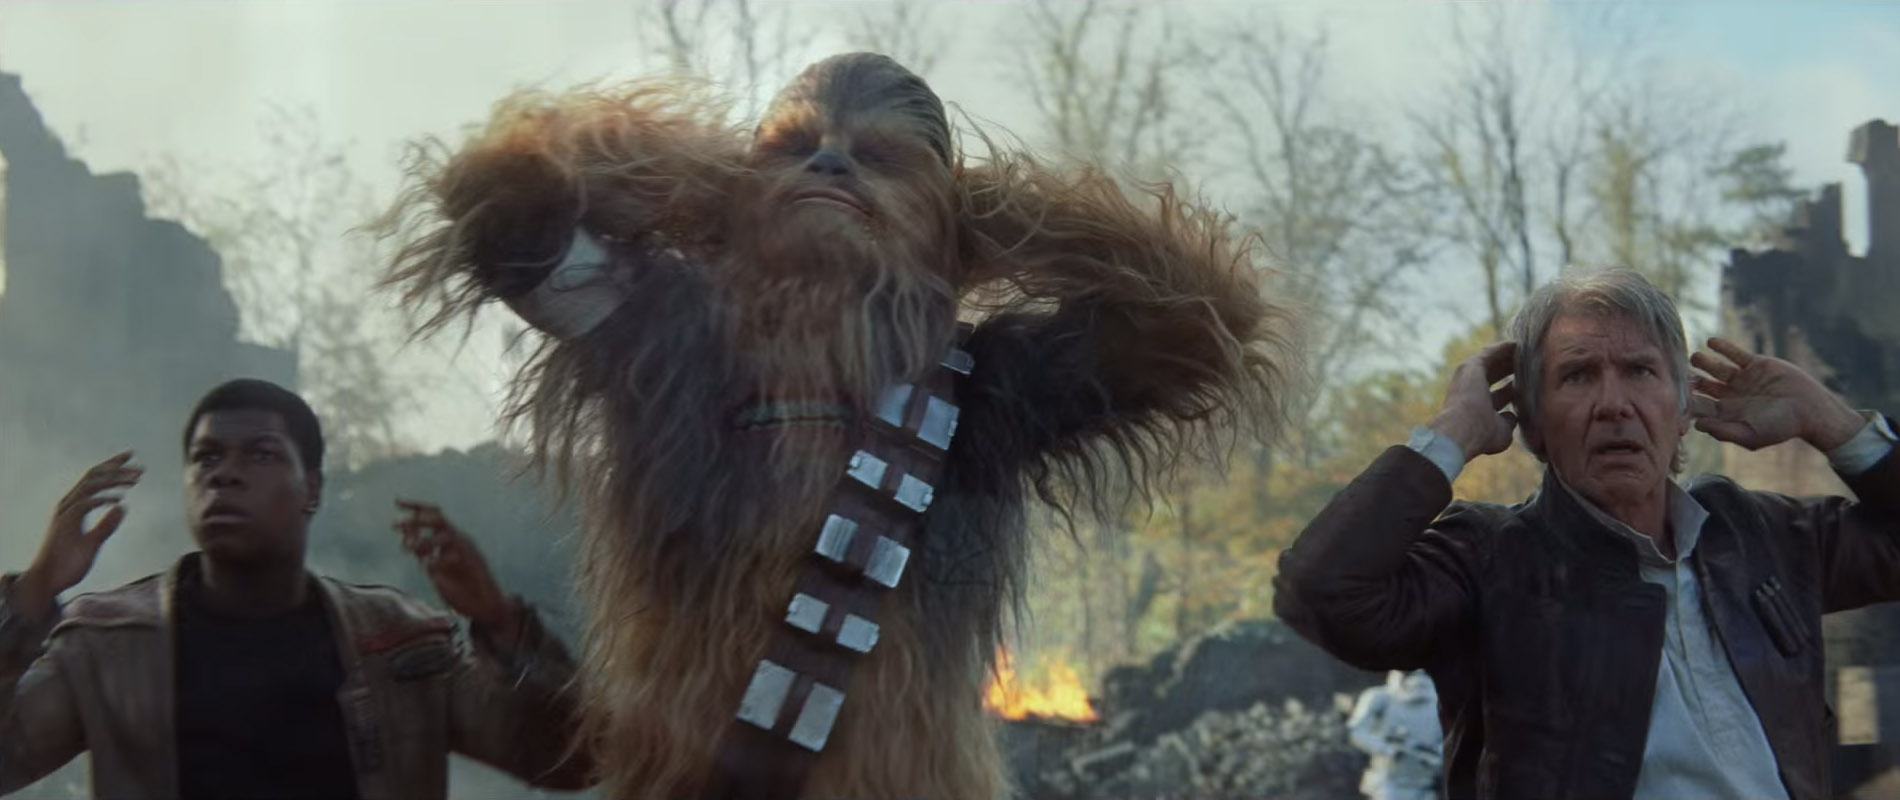 Plik:Star-Wars-7-Trailer-3-Halo-Solo-Finn-Chewbacca-Surrender.jpg